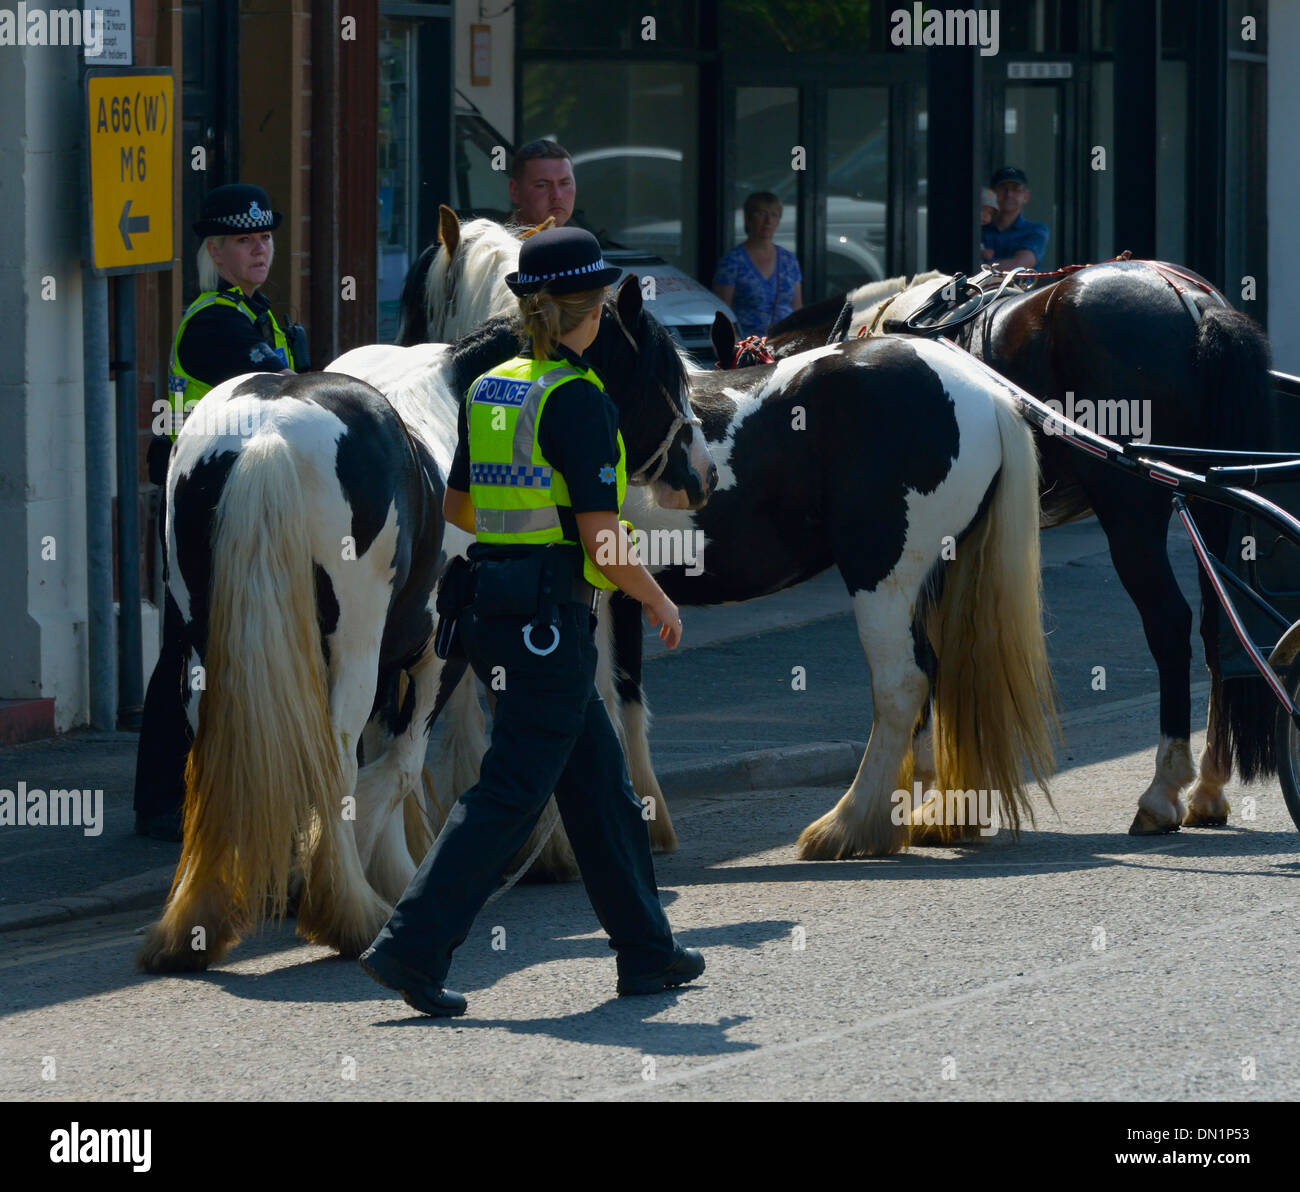 Policewomen with horses. Appleby Horse Fair, June 2013. Appleby-in-Westmorland, Cumbria, England, United Kingdom, Europe. Stock Photo